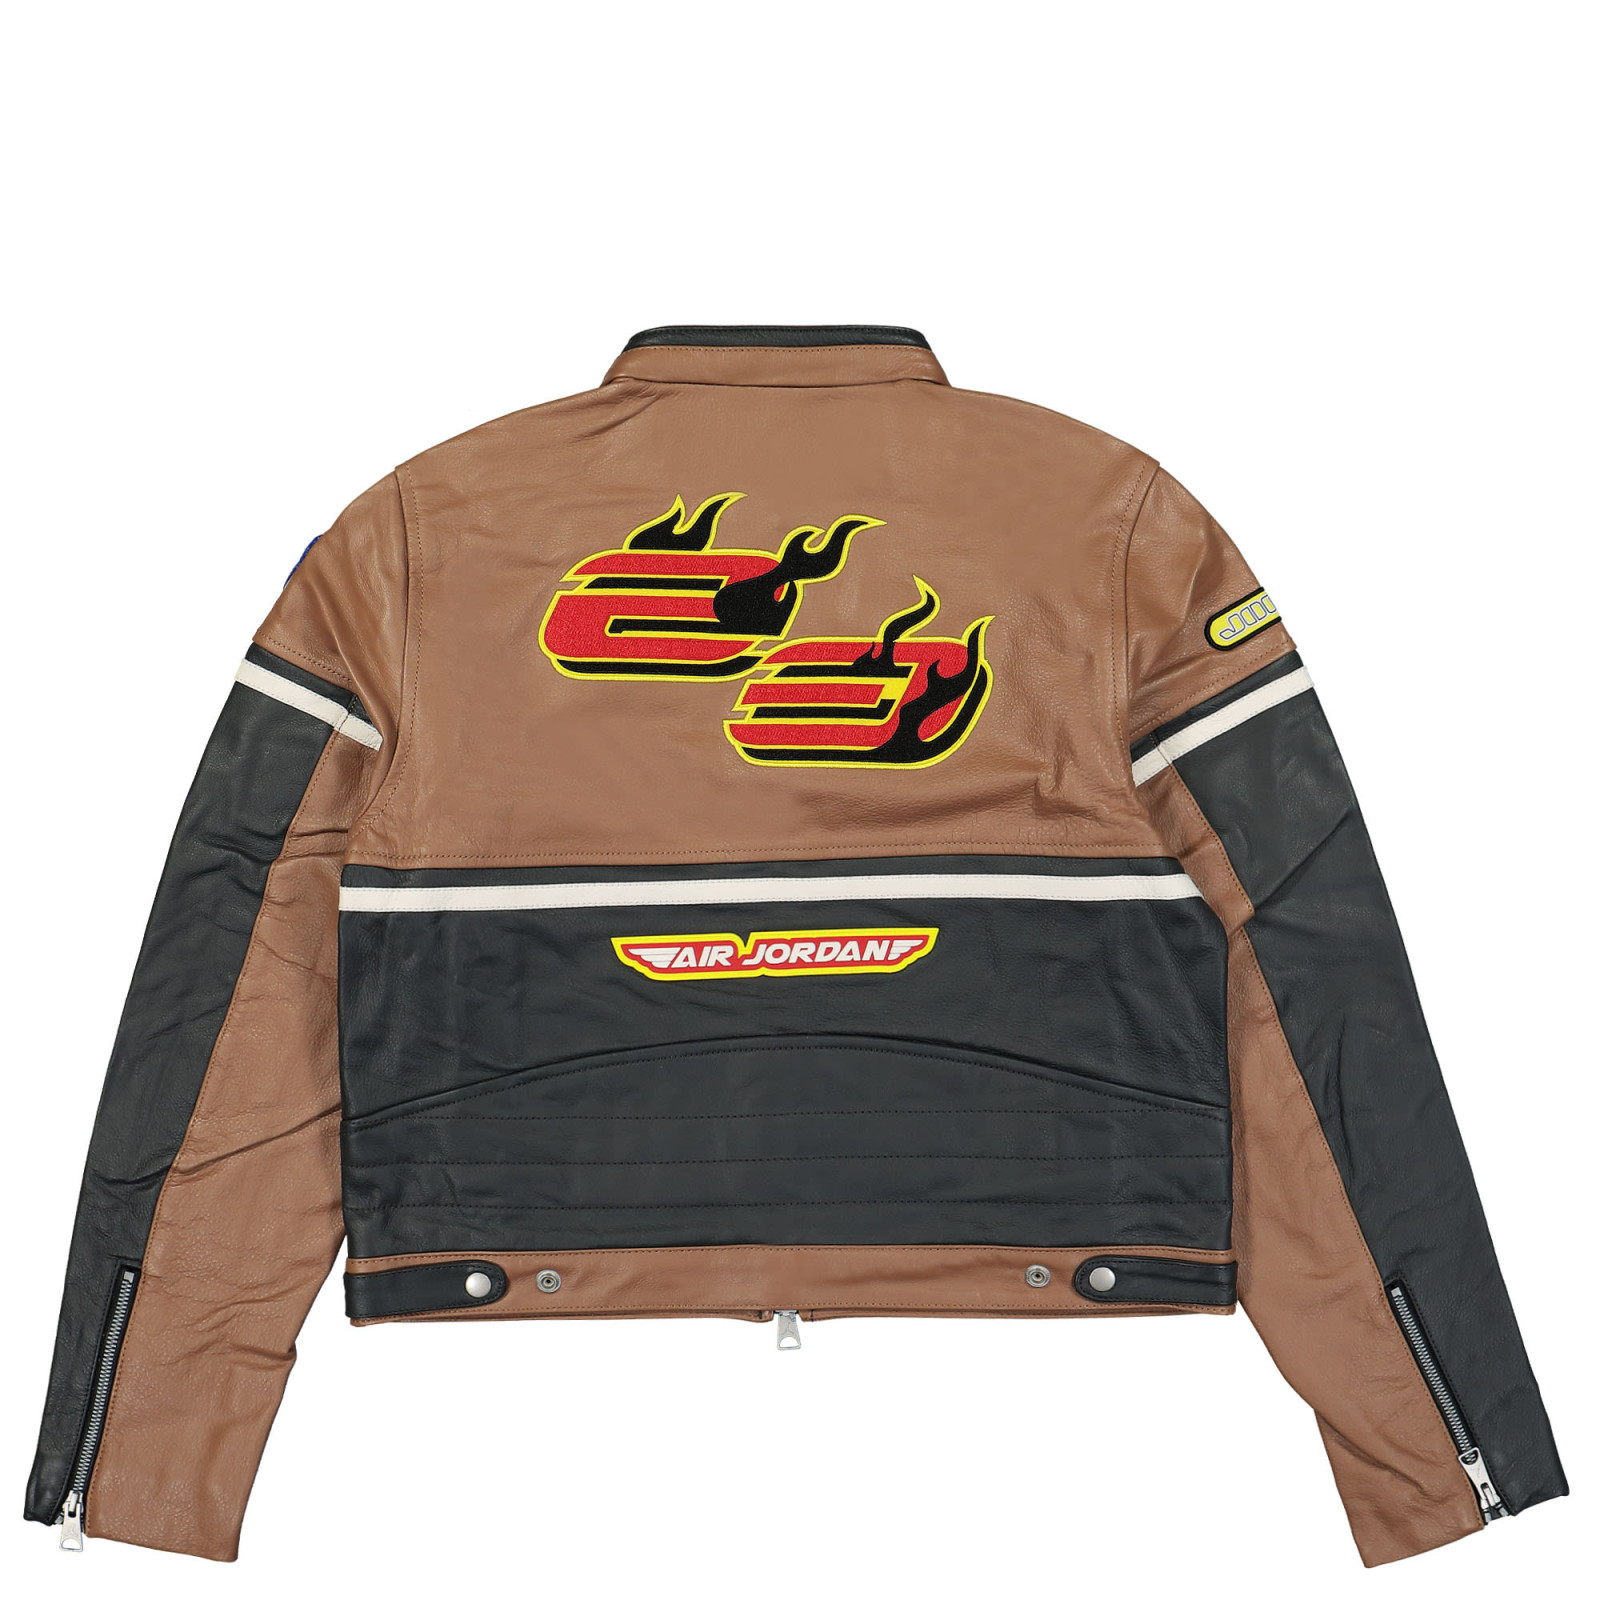 Travis Scott x Air Jordan
Sp Jacket
« Archaeo Brown »